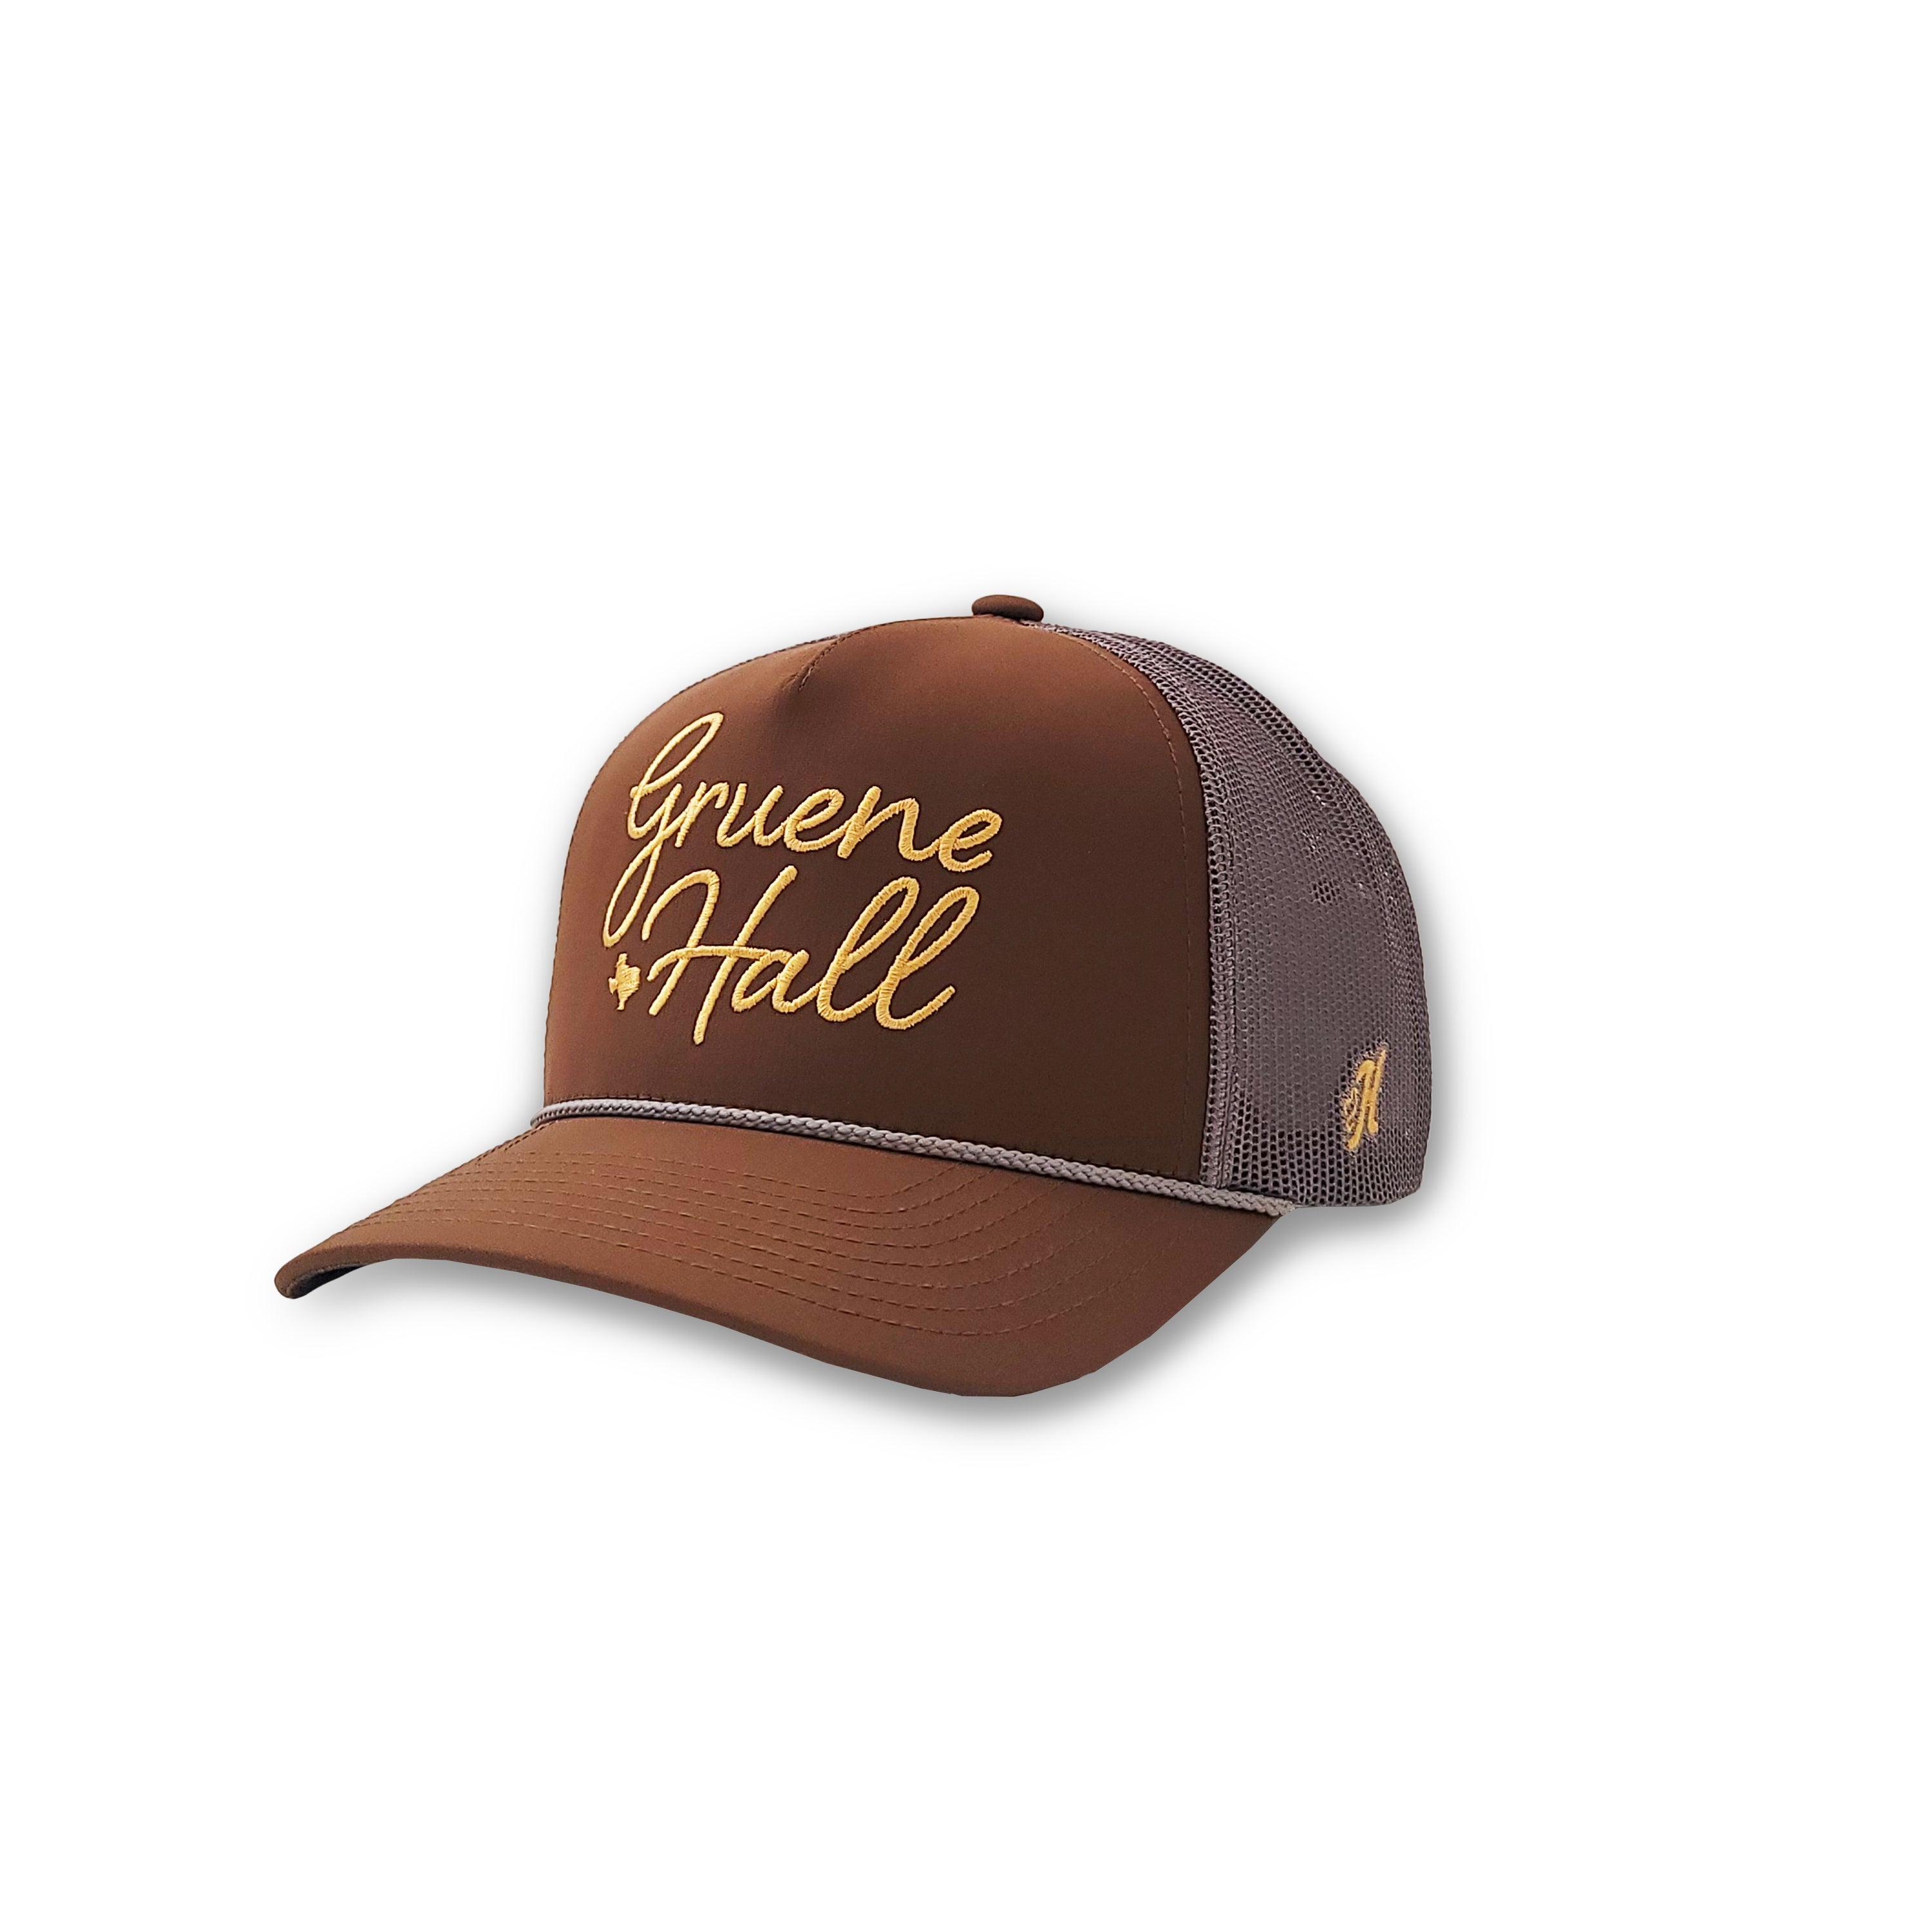 Hooey x Gruene Hall Stitched Trucker Cap  #2387T